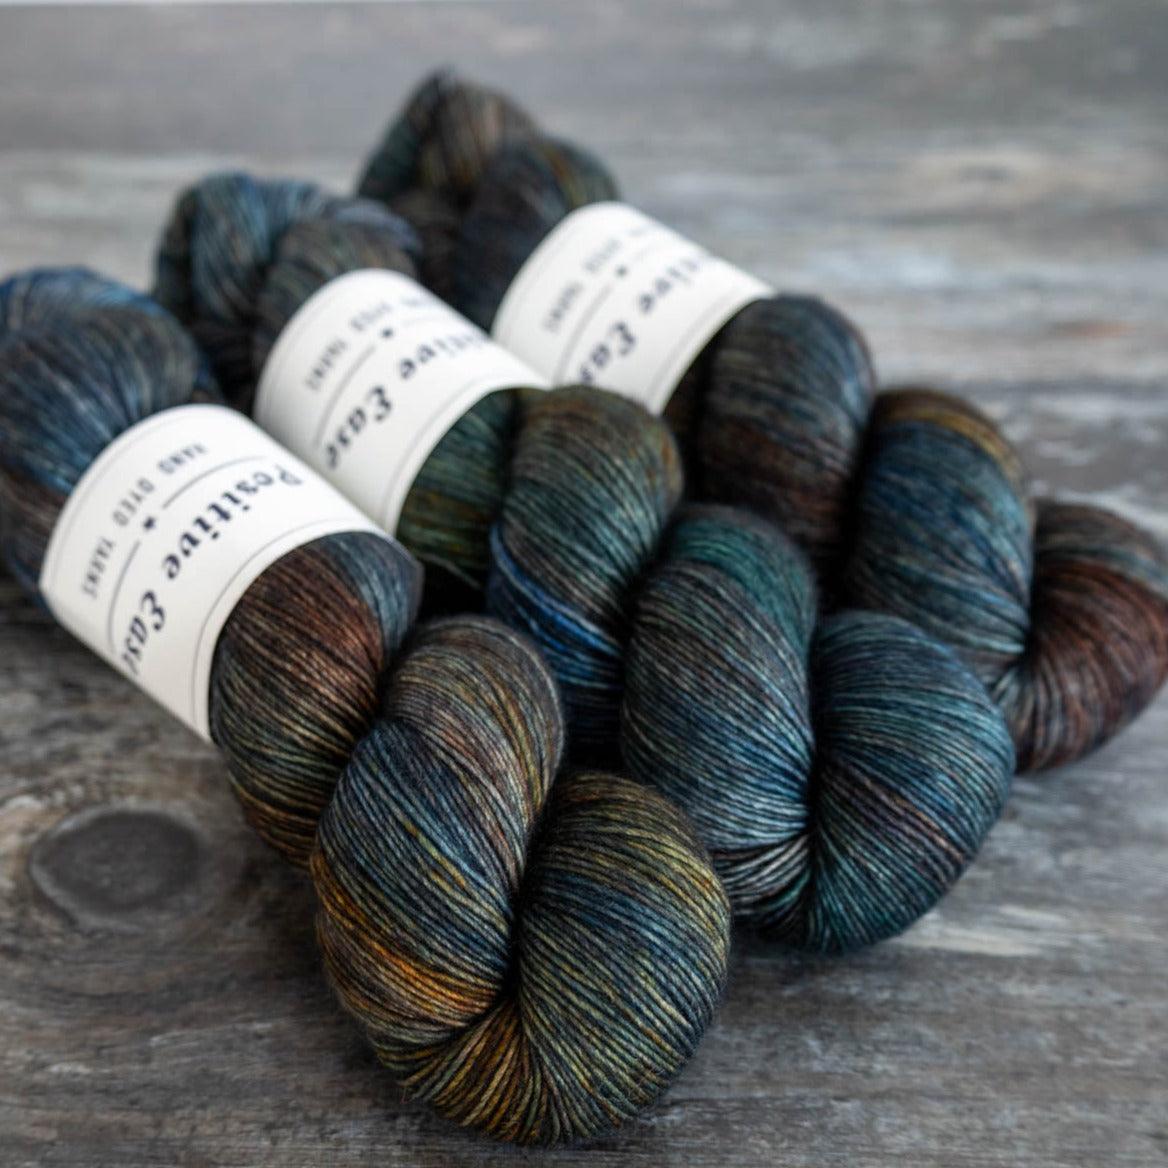 Positive Ease Positive Ease Merino Singles - Tweed Coat - 4ply Knitting Yarn